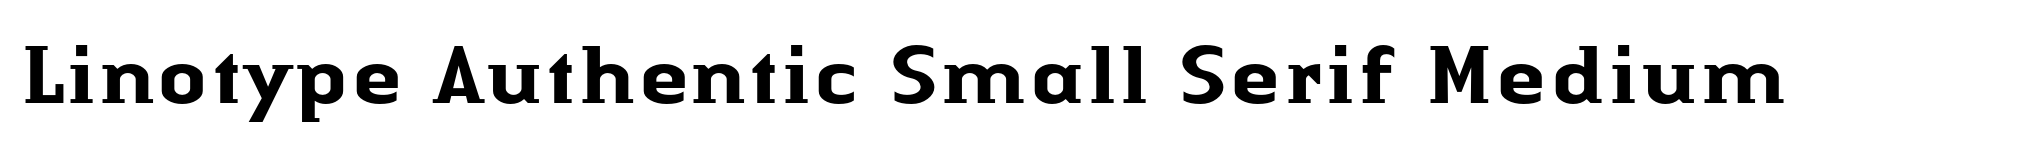 Linotype Authentic Small Serif Medium image